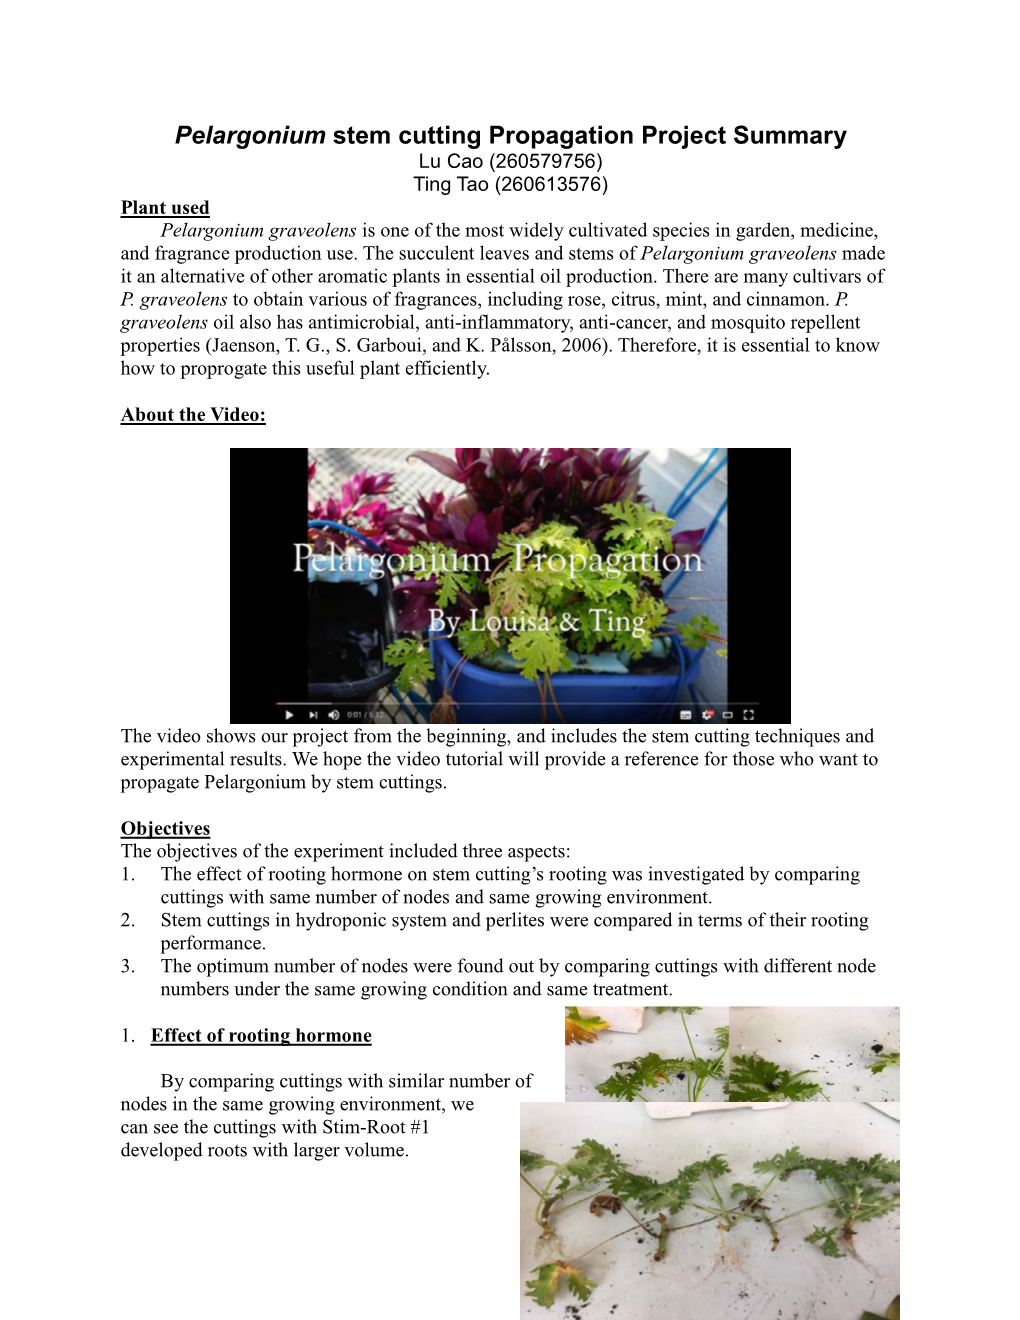 Pelargonium Stem Cutting Propagation Project Summary